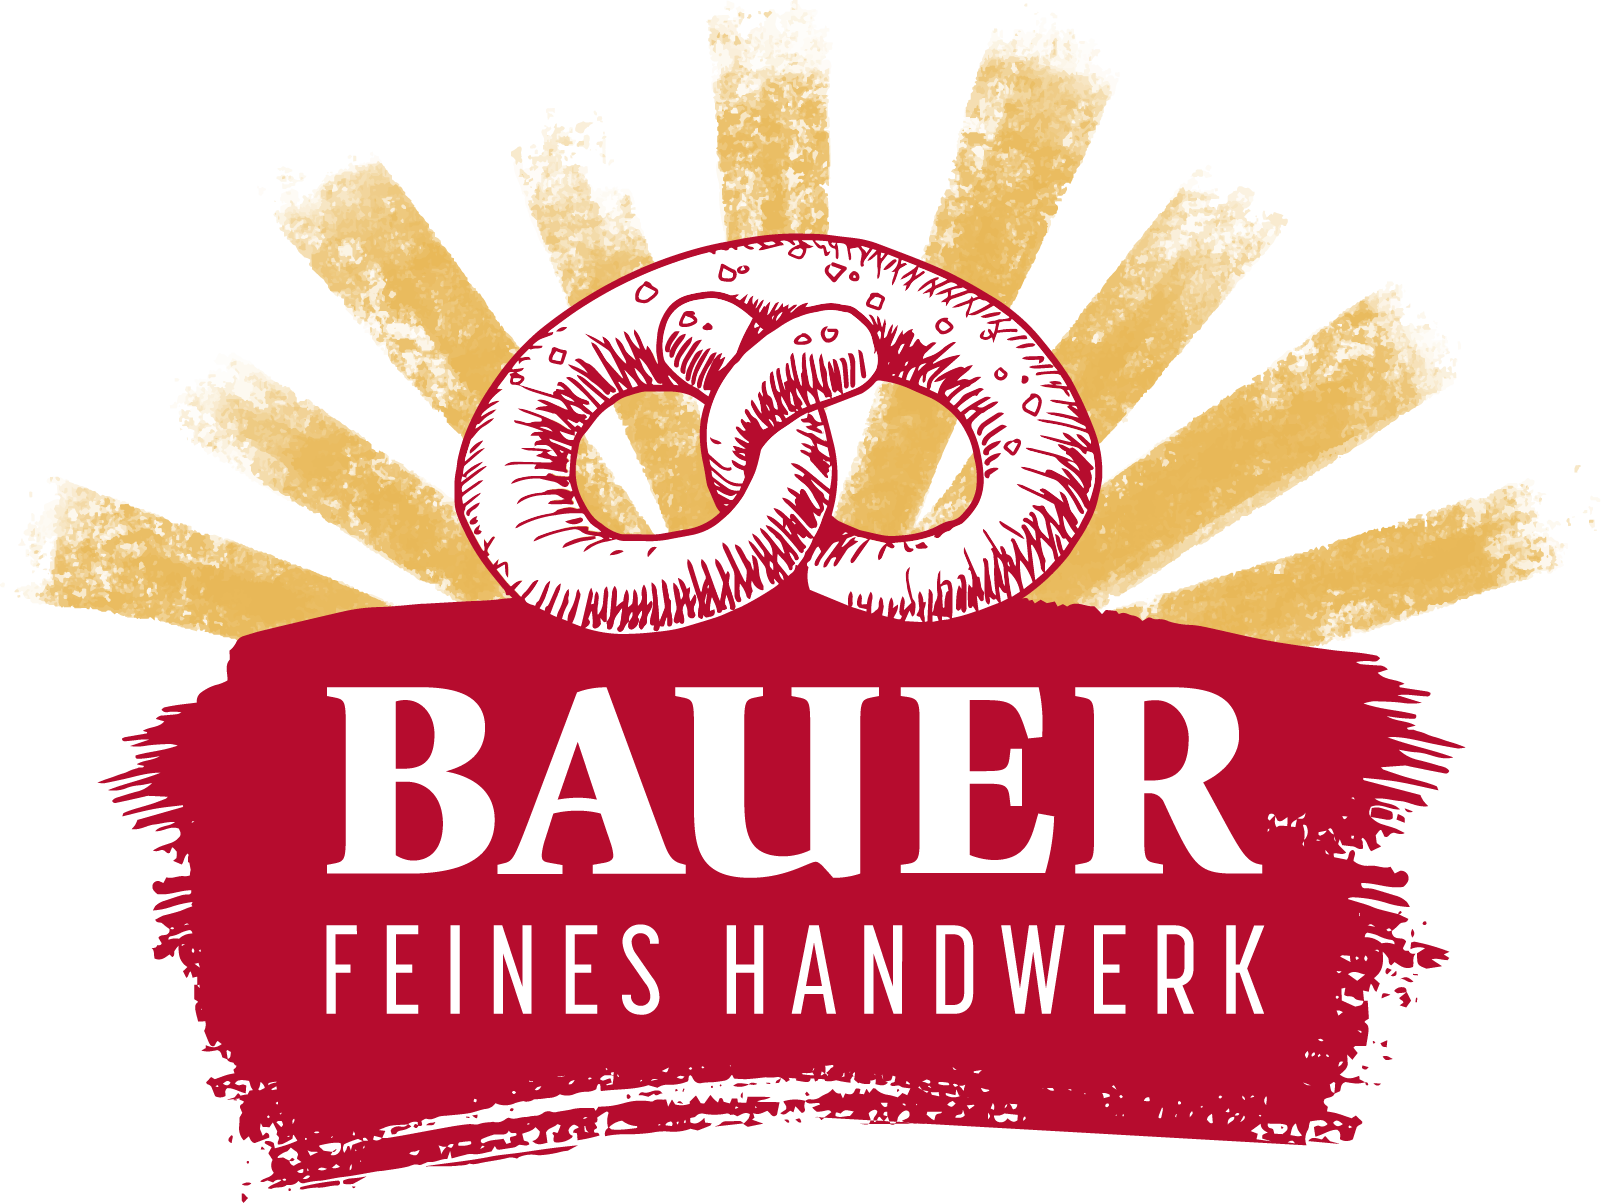 Bäckerei Bauer